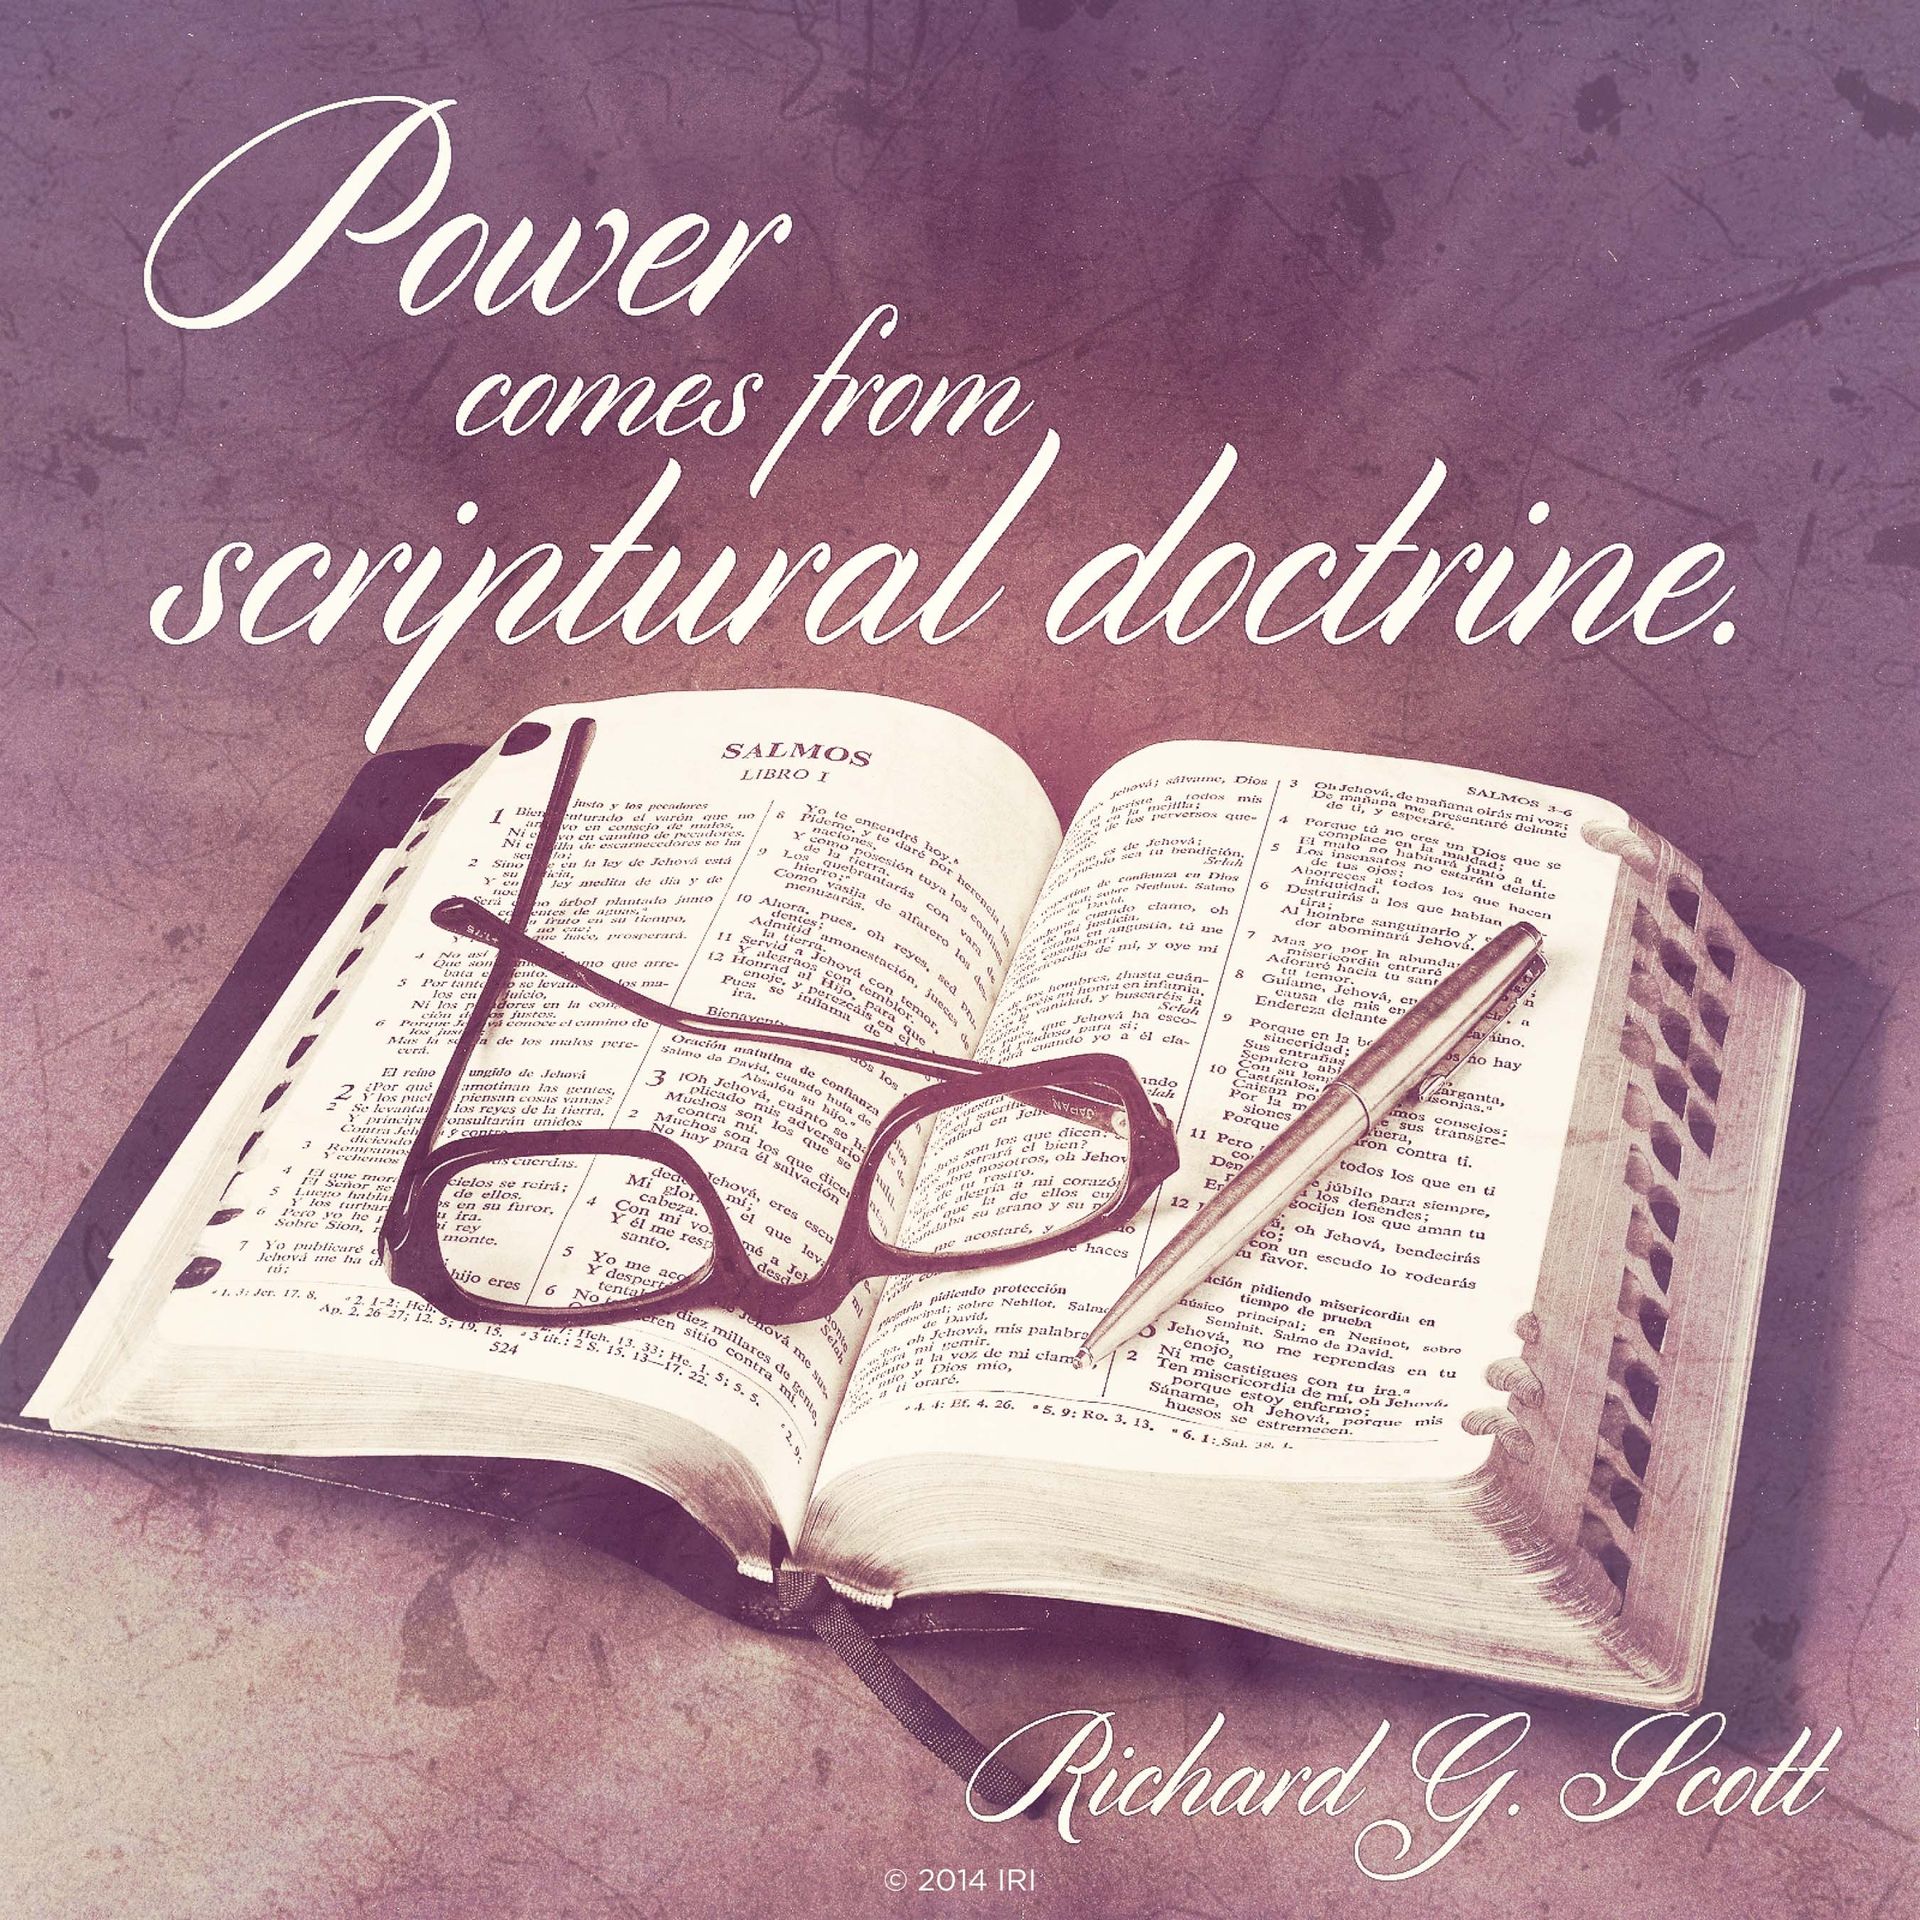 “Power comes from scriptural doctrine.”—Elder Richard G. Scott, “To Be Healed”